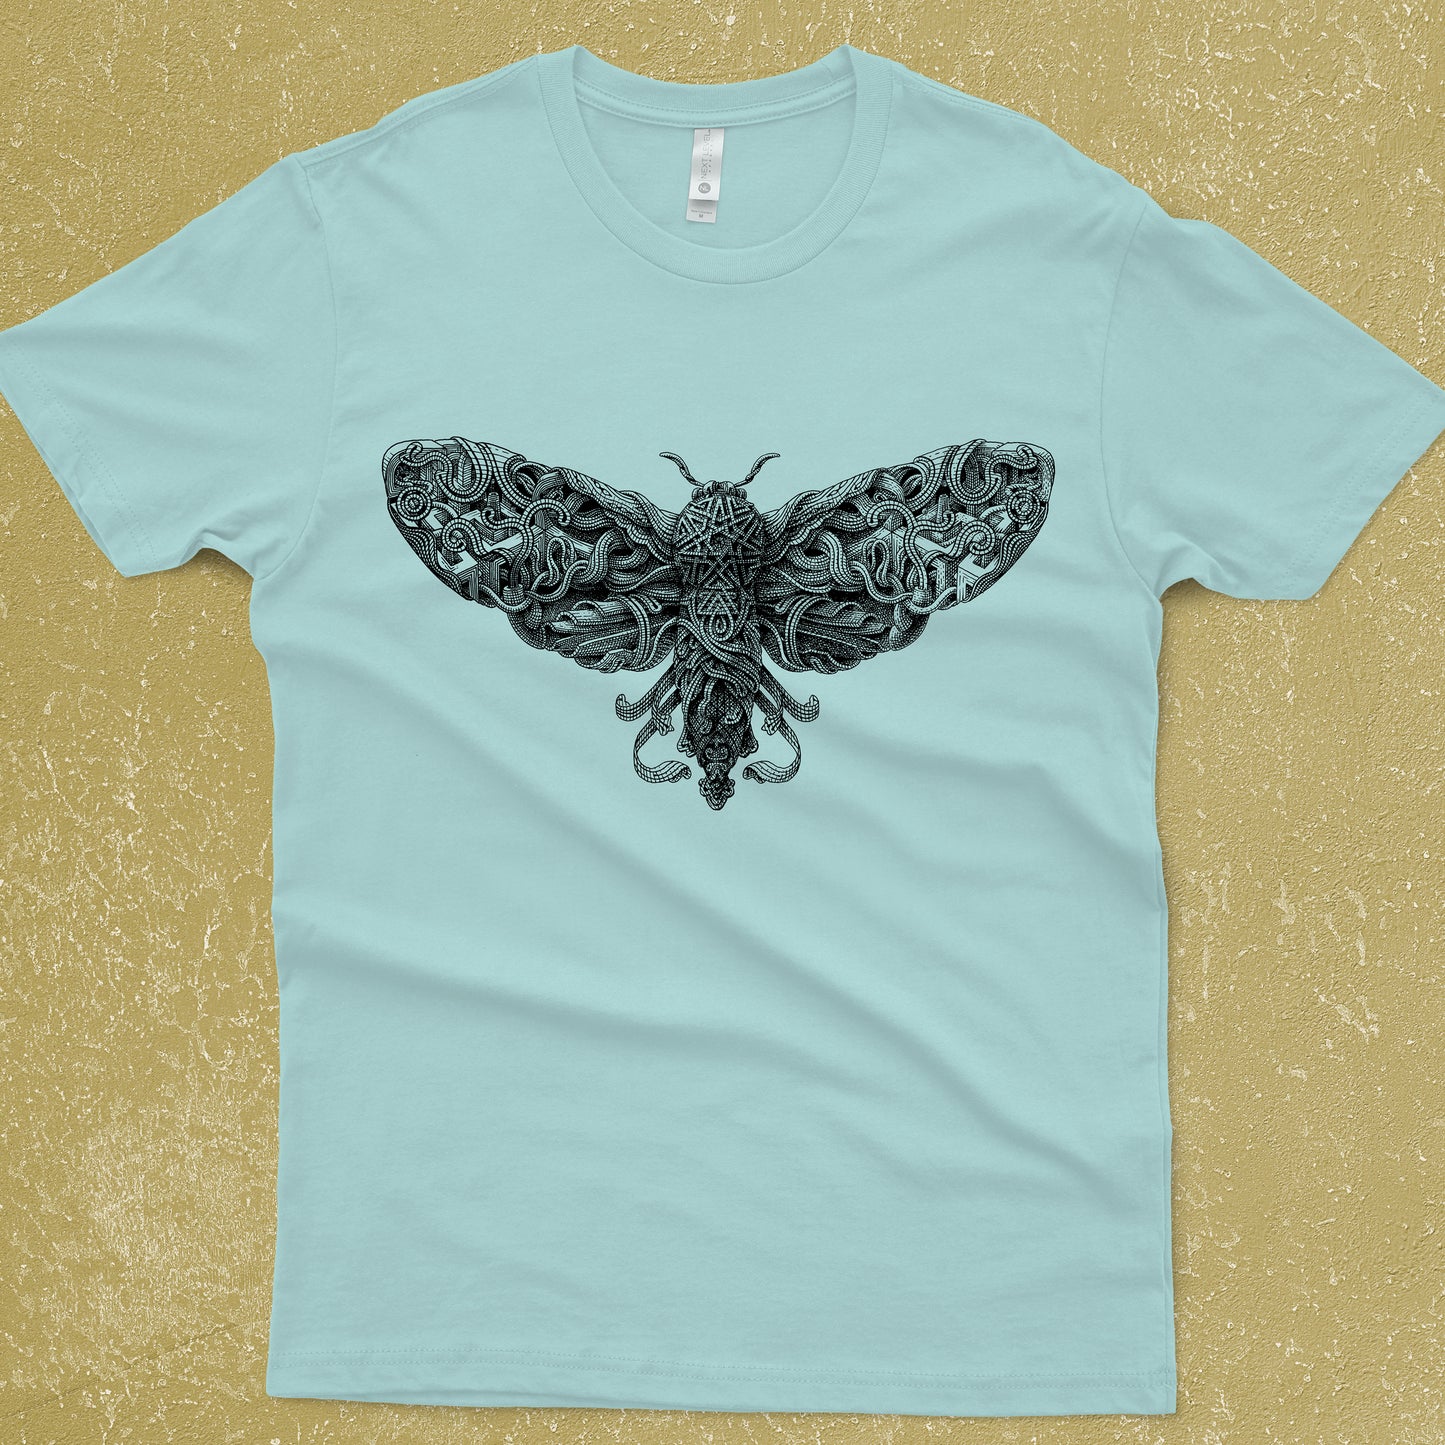 Florid Moth Shirt